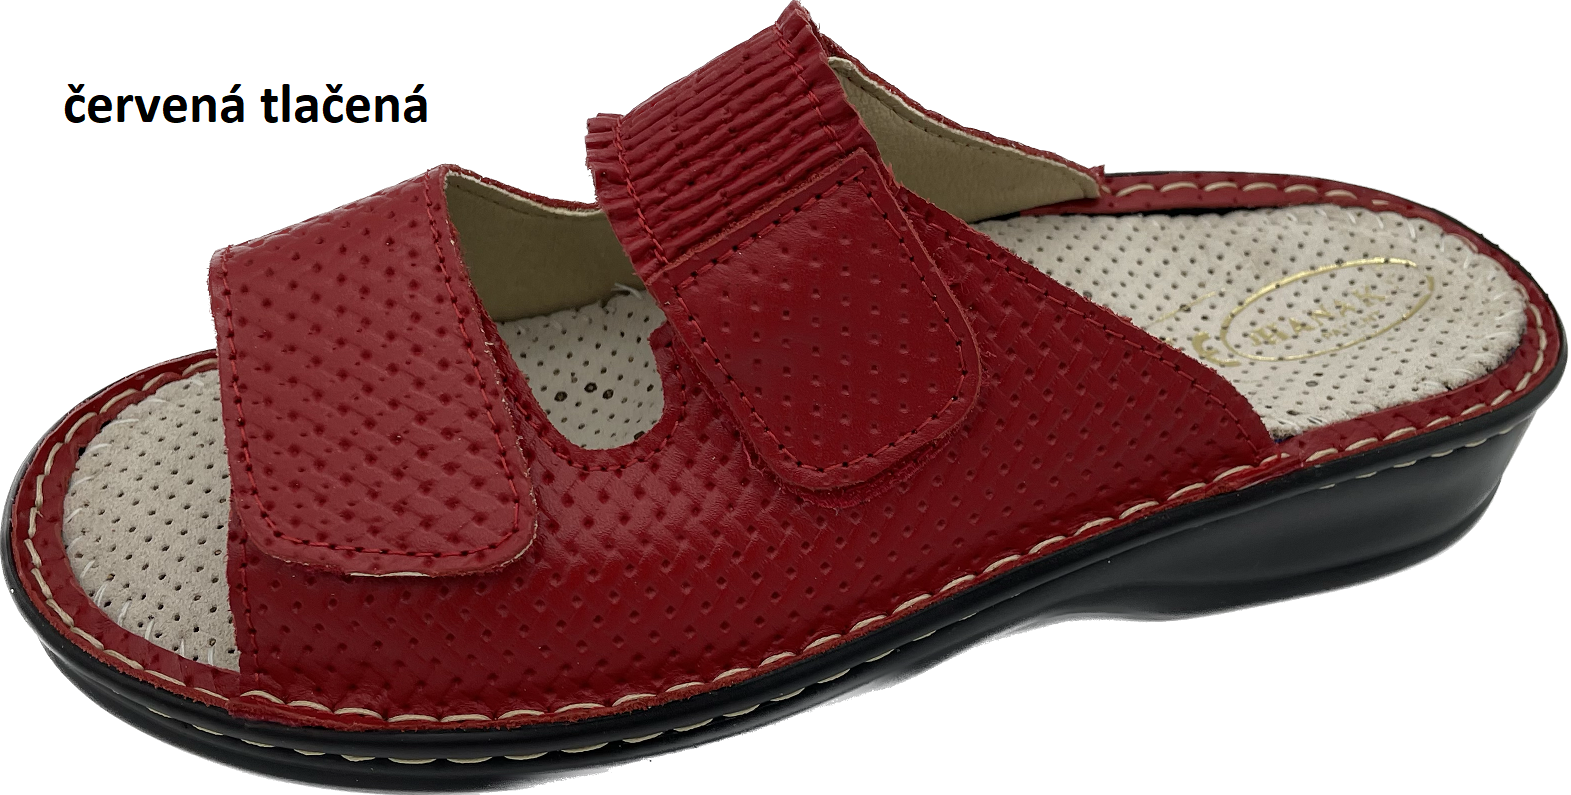 Boty Hanák vzor 304 - černá podešev Barva usně: červená tlačená, Velikosti obuvi: 38